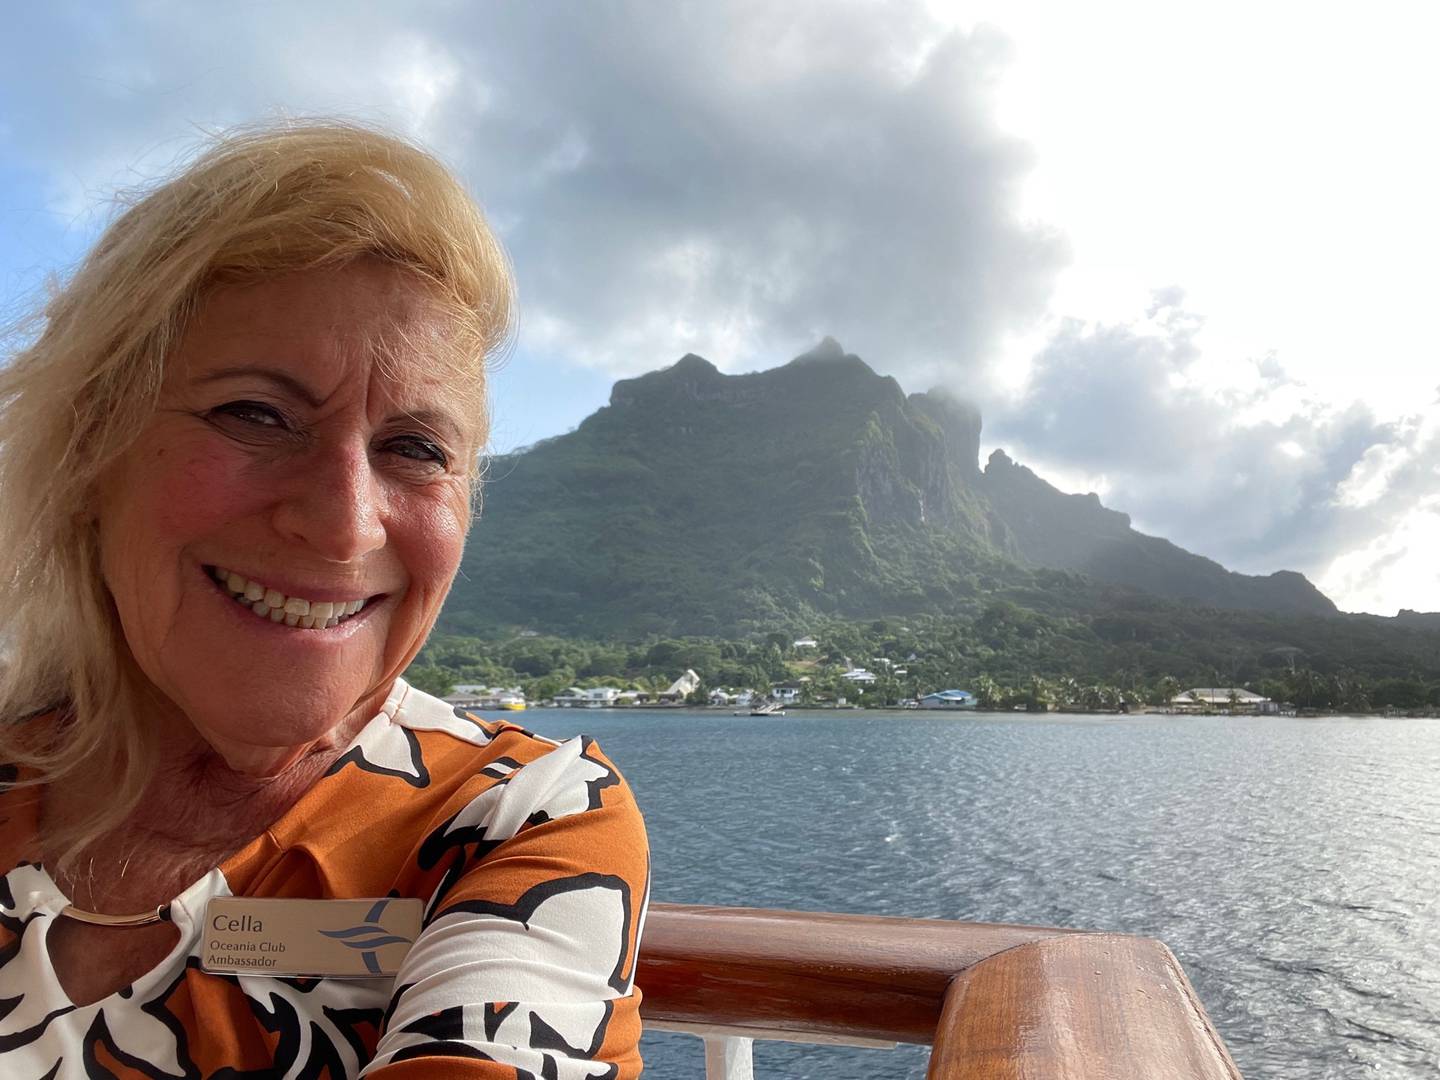 Cella Baker poses on board the Oceania Insignia